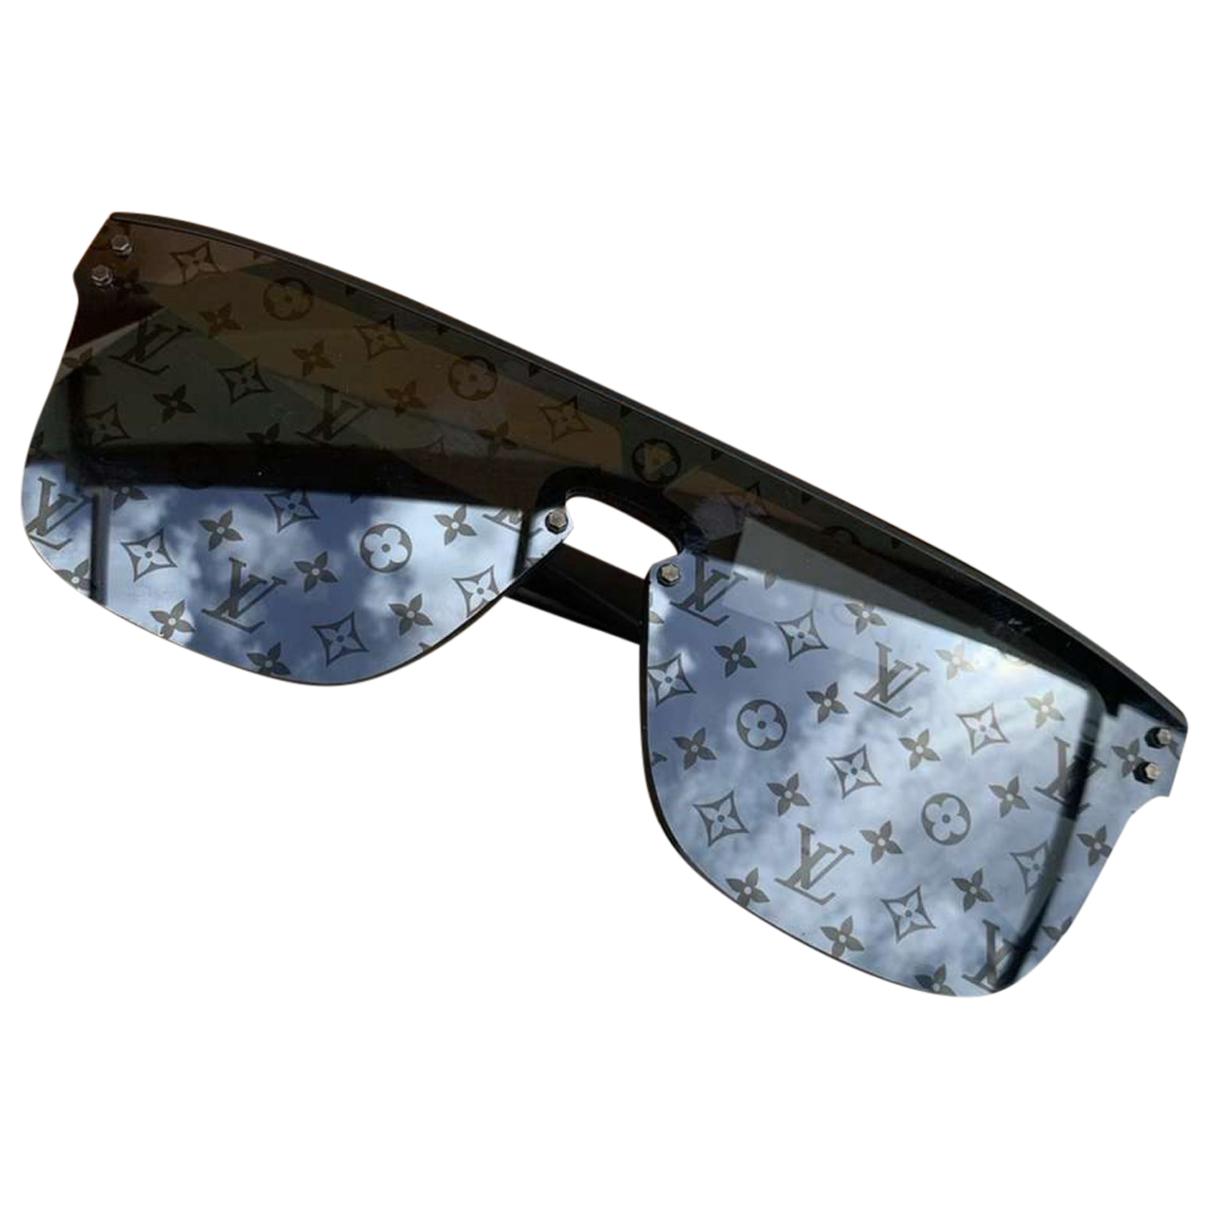 Oversized sunglasses Louis Vuitton Black in Plastic - 37370816